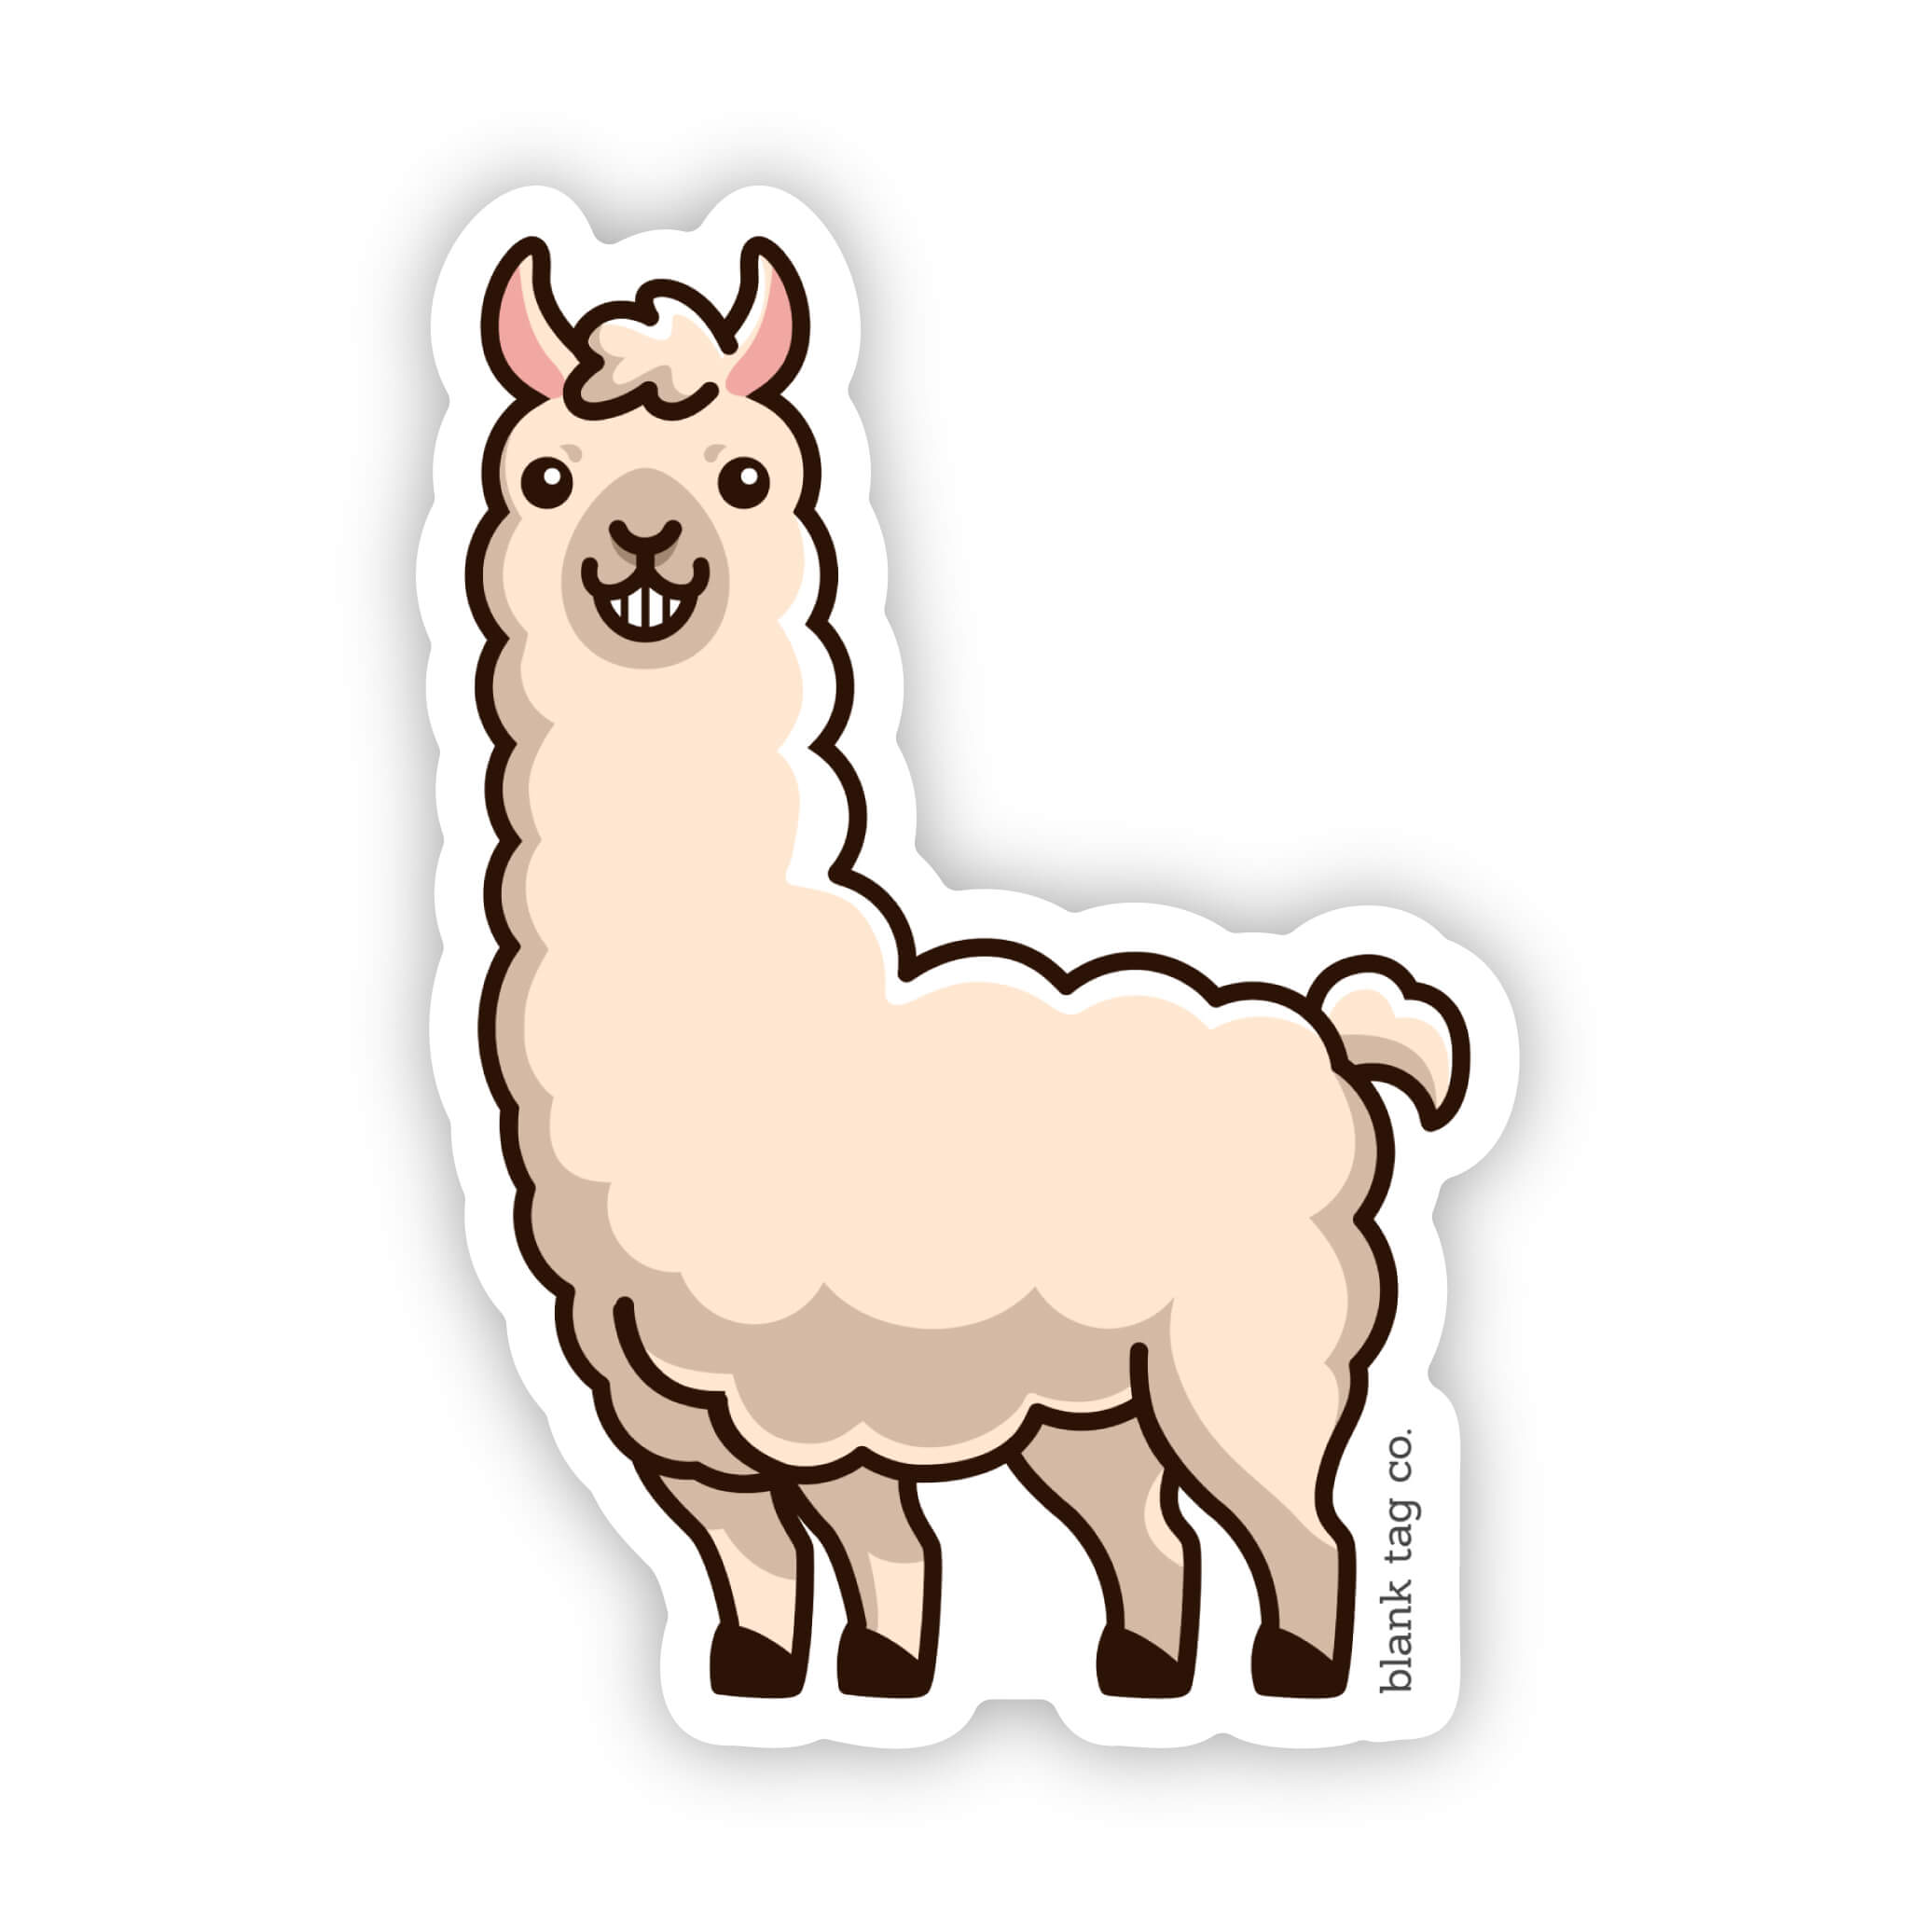 The Llama Sticker